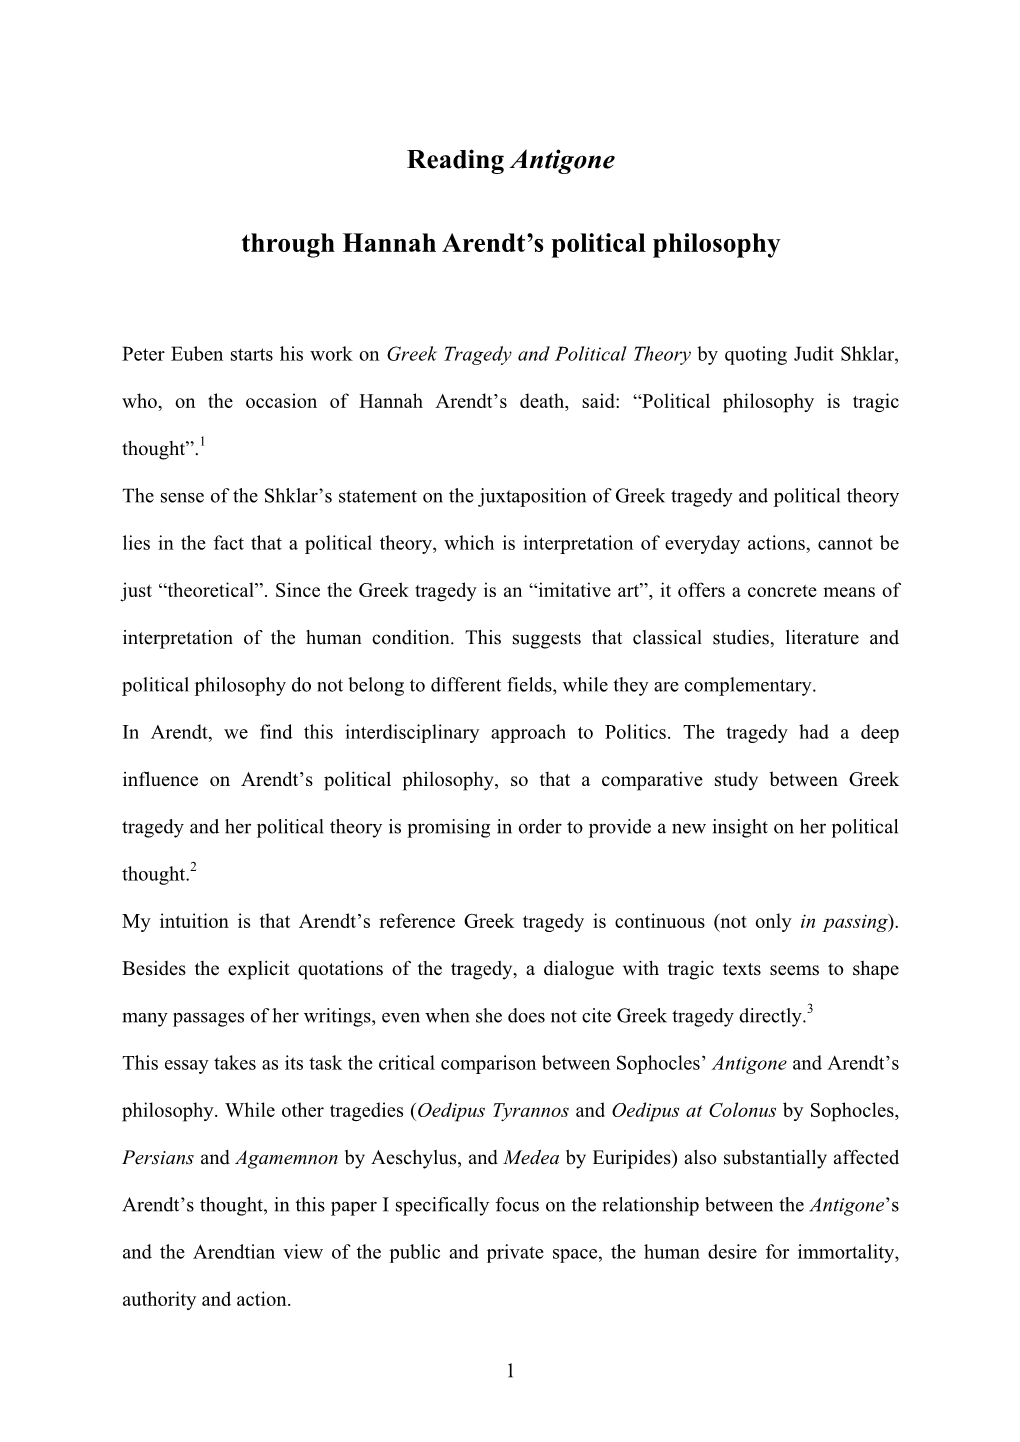 Reading Antigone Through Hannah Arendt's Political Philosophy